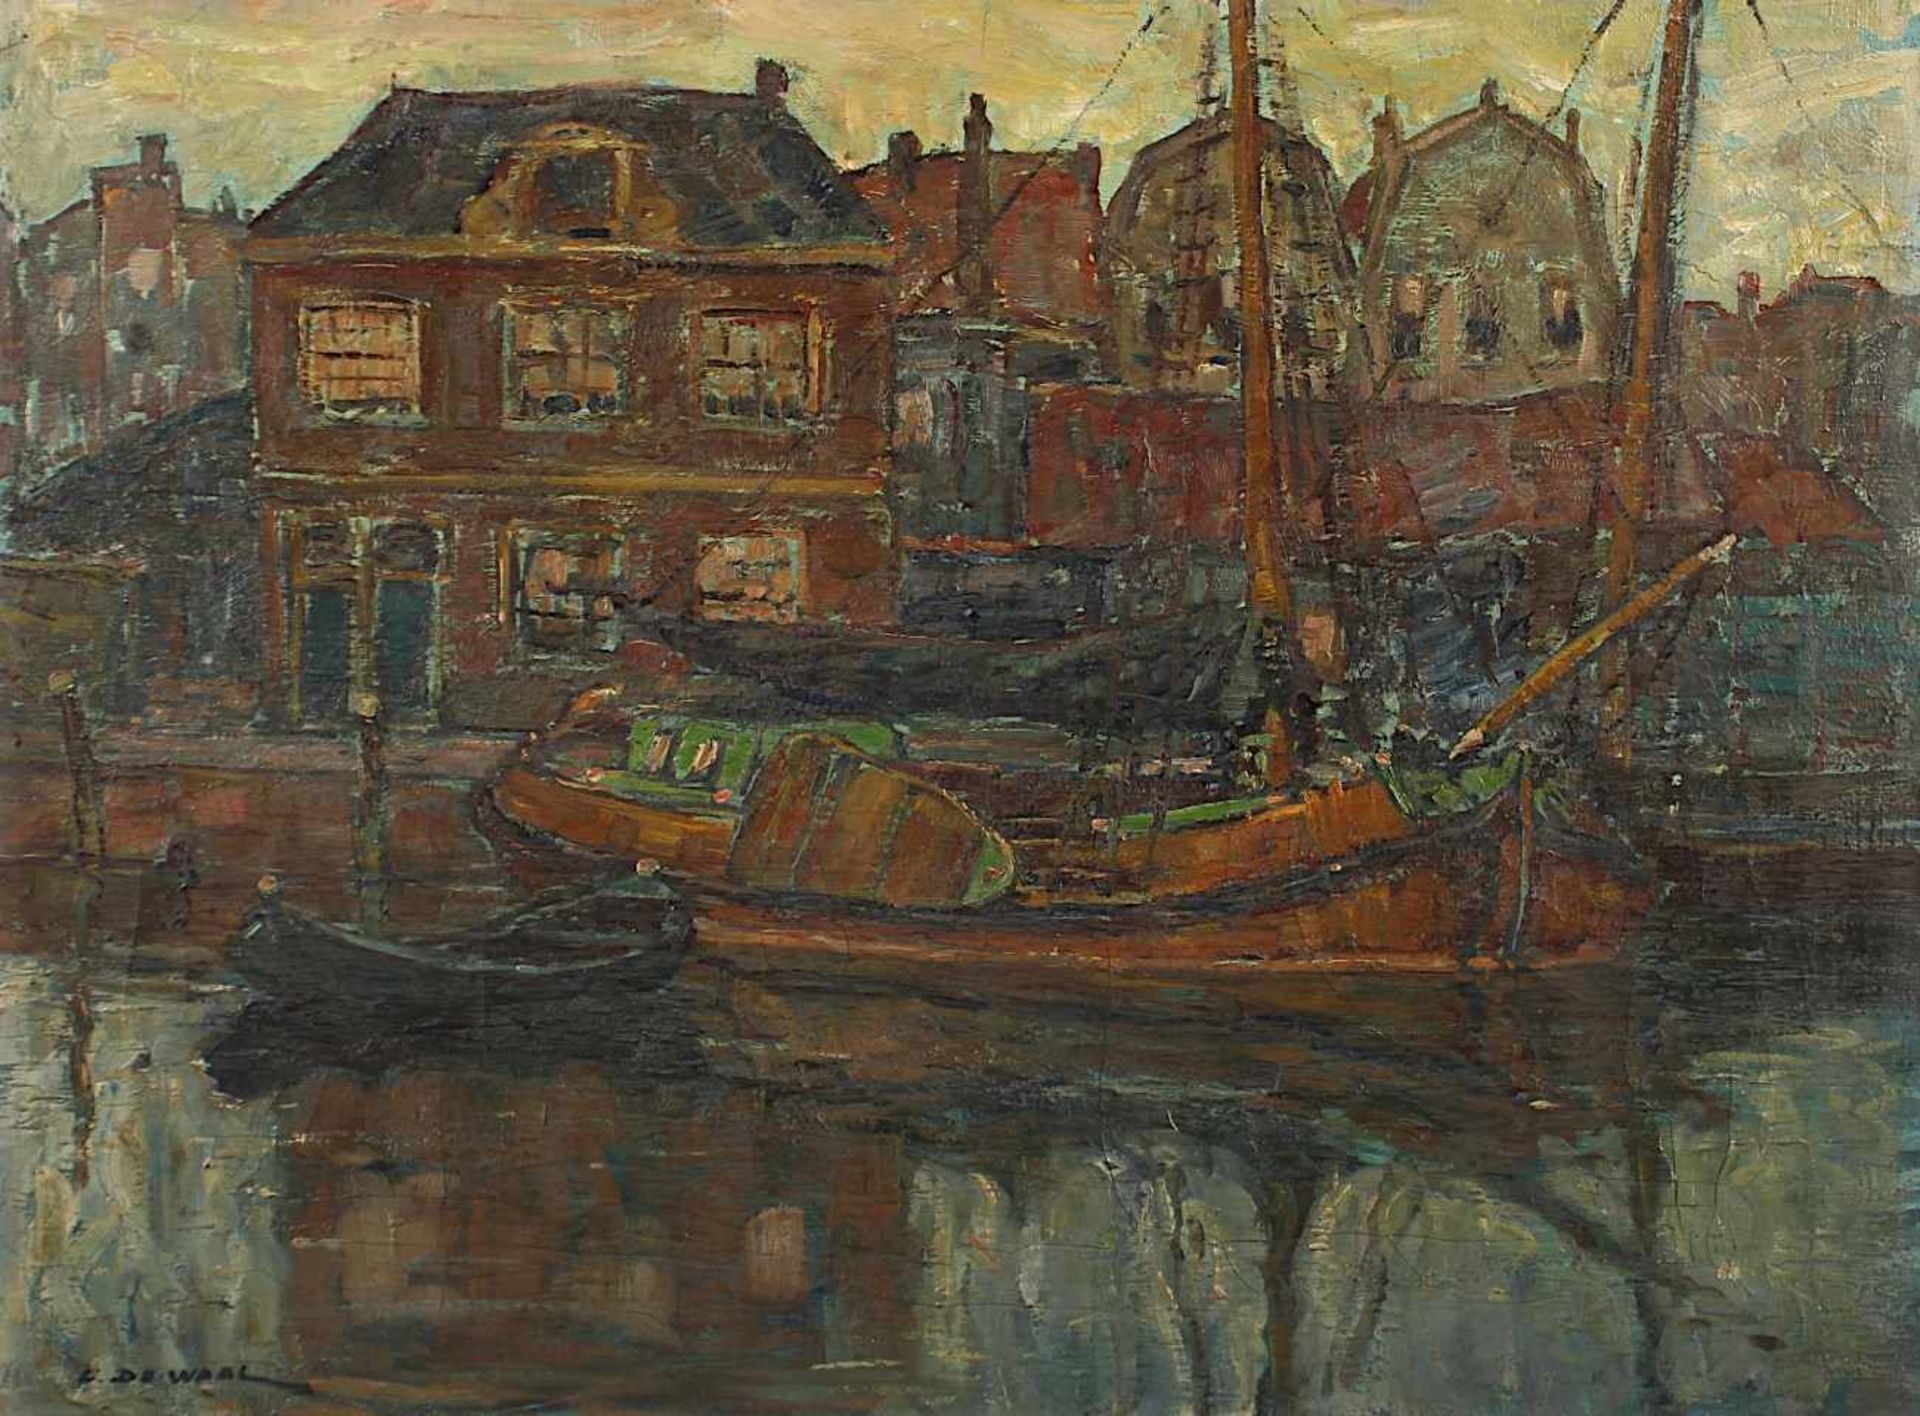 DE WAAL, Cornelis (1881-1946), "Niederländische Grachtenansicht", Öl/Lwd., 45 x 60, unten links